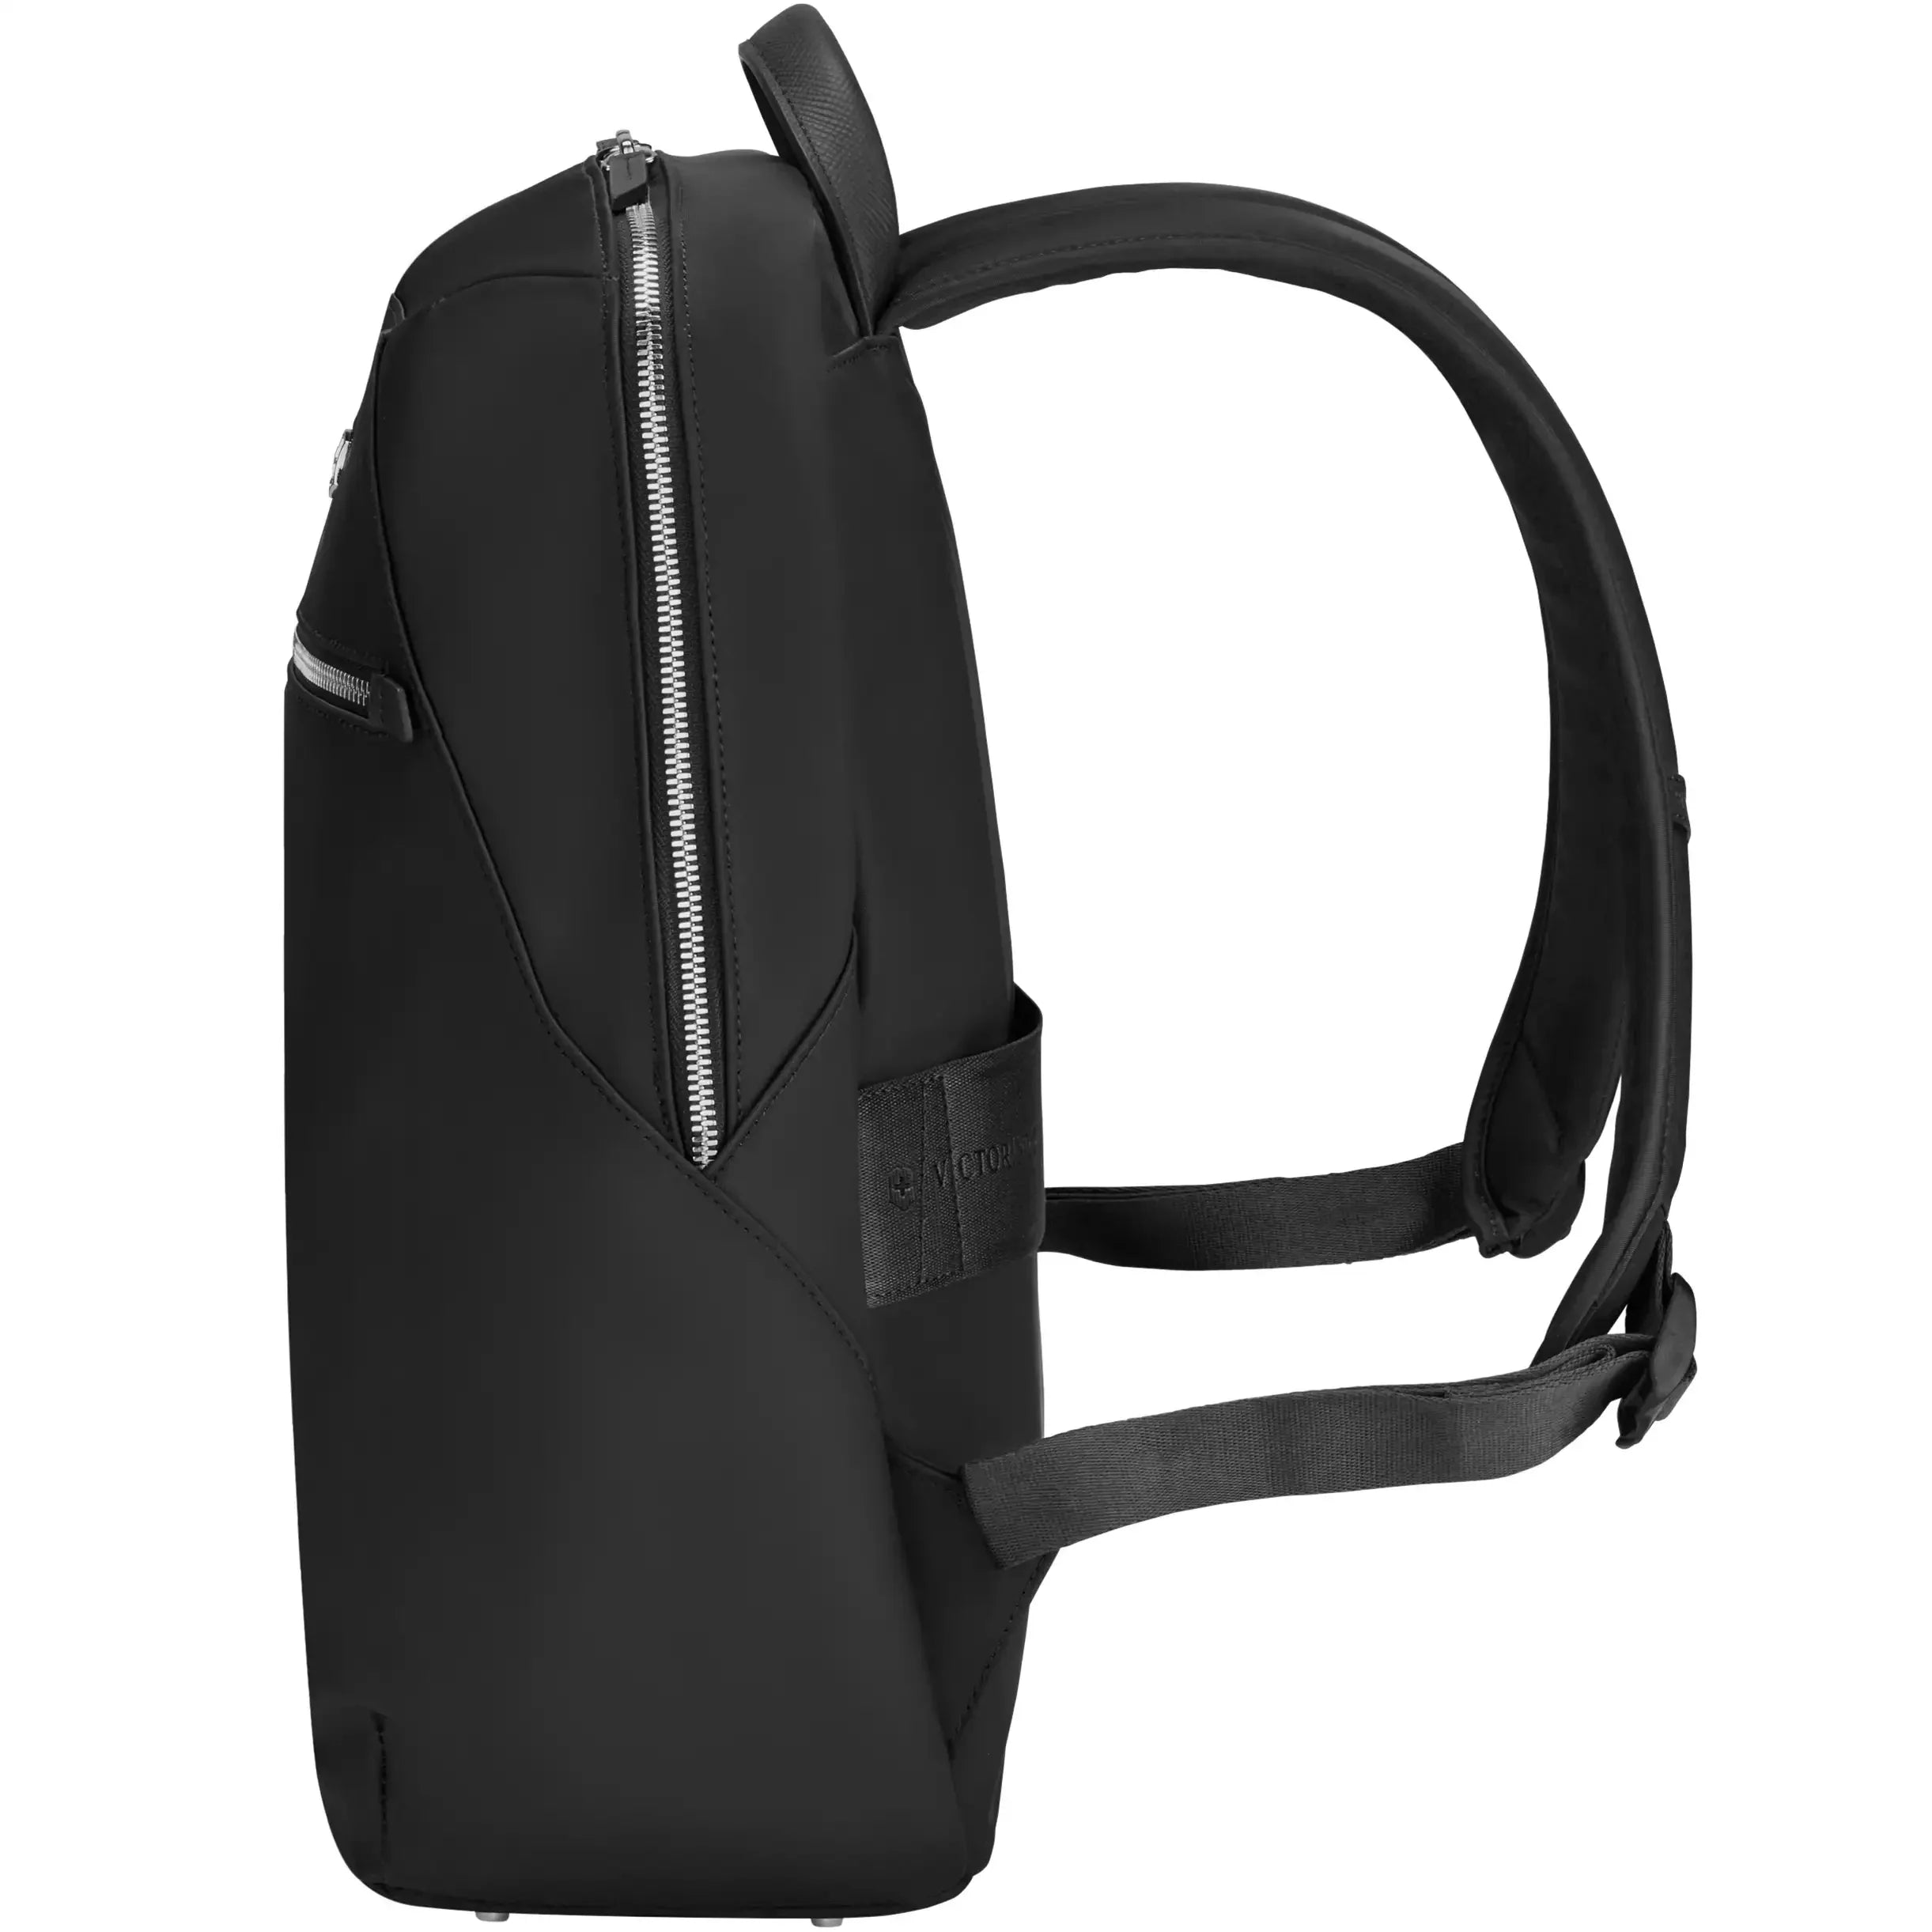 Victorinox Victoria Signature Compact Backpack 38 cm - Black